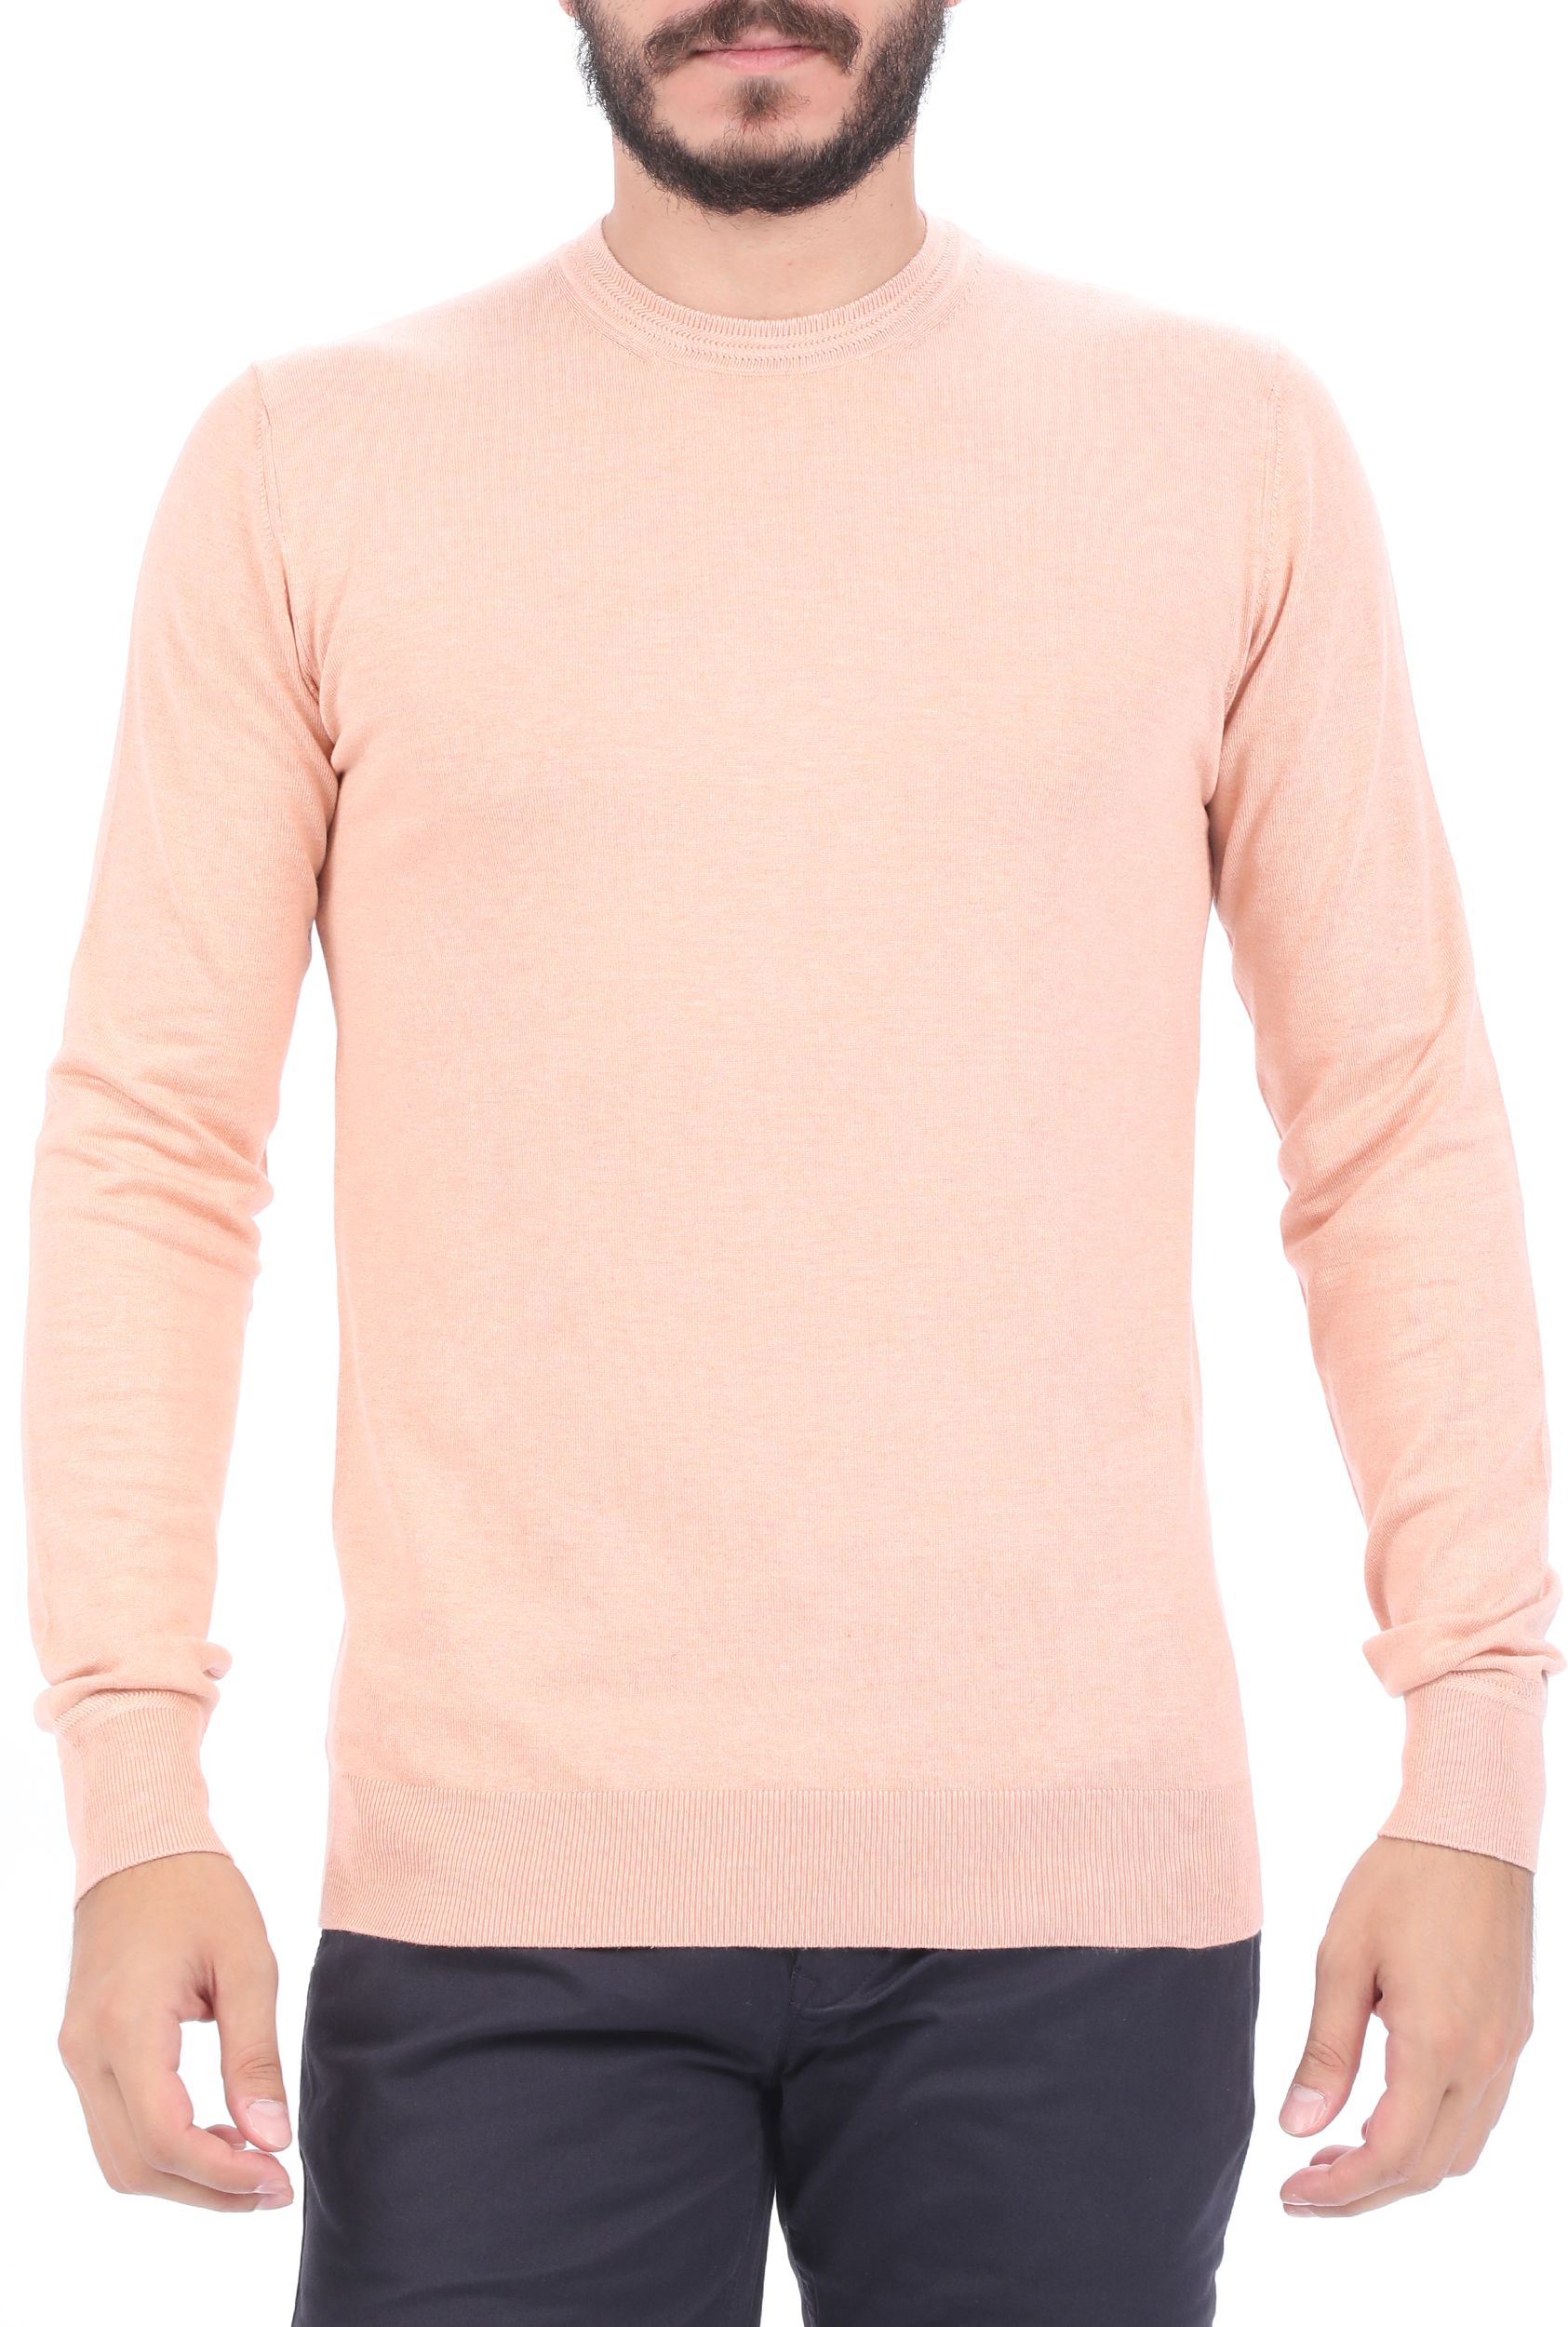 SCOTCH & SODA – Ανδρικη πλεκτη μπλουζα SCOTCH & SODA Classic melange Ecovero blend ροζ